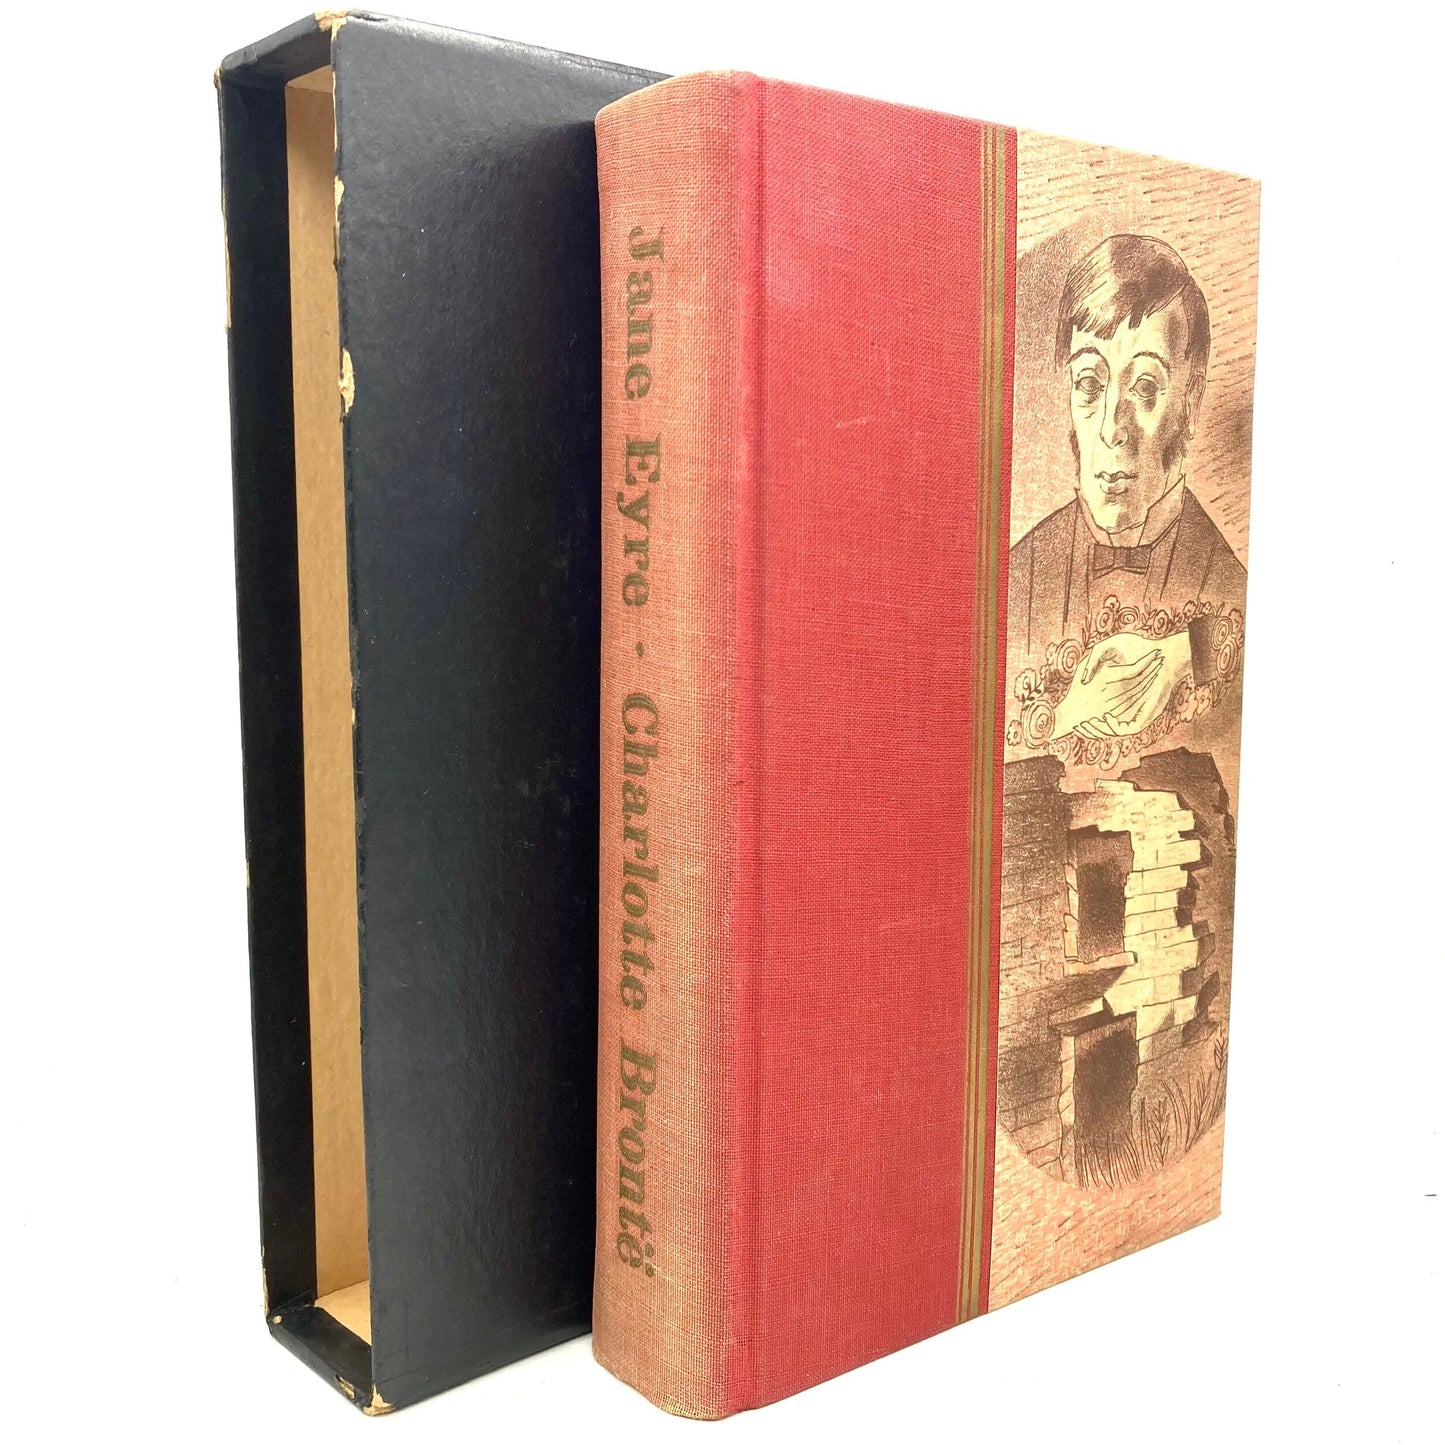 BRONTE, Charlotte "Jane Eyre" [Heritage Press, 1942] - Buzz Bookstore